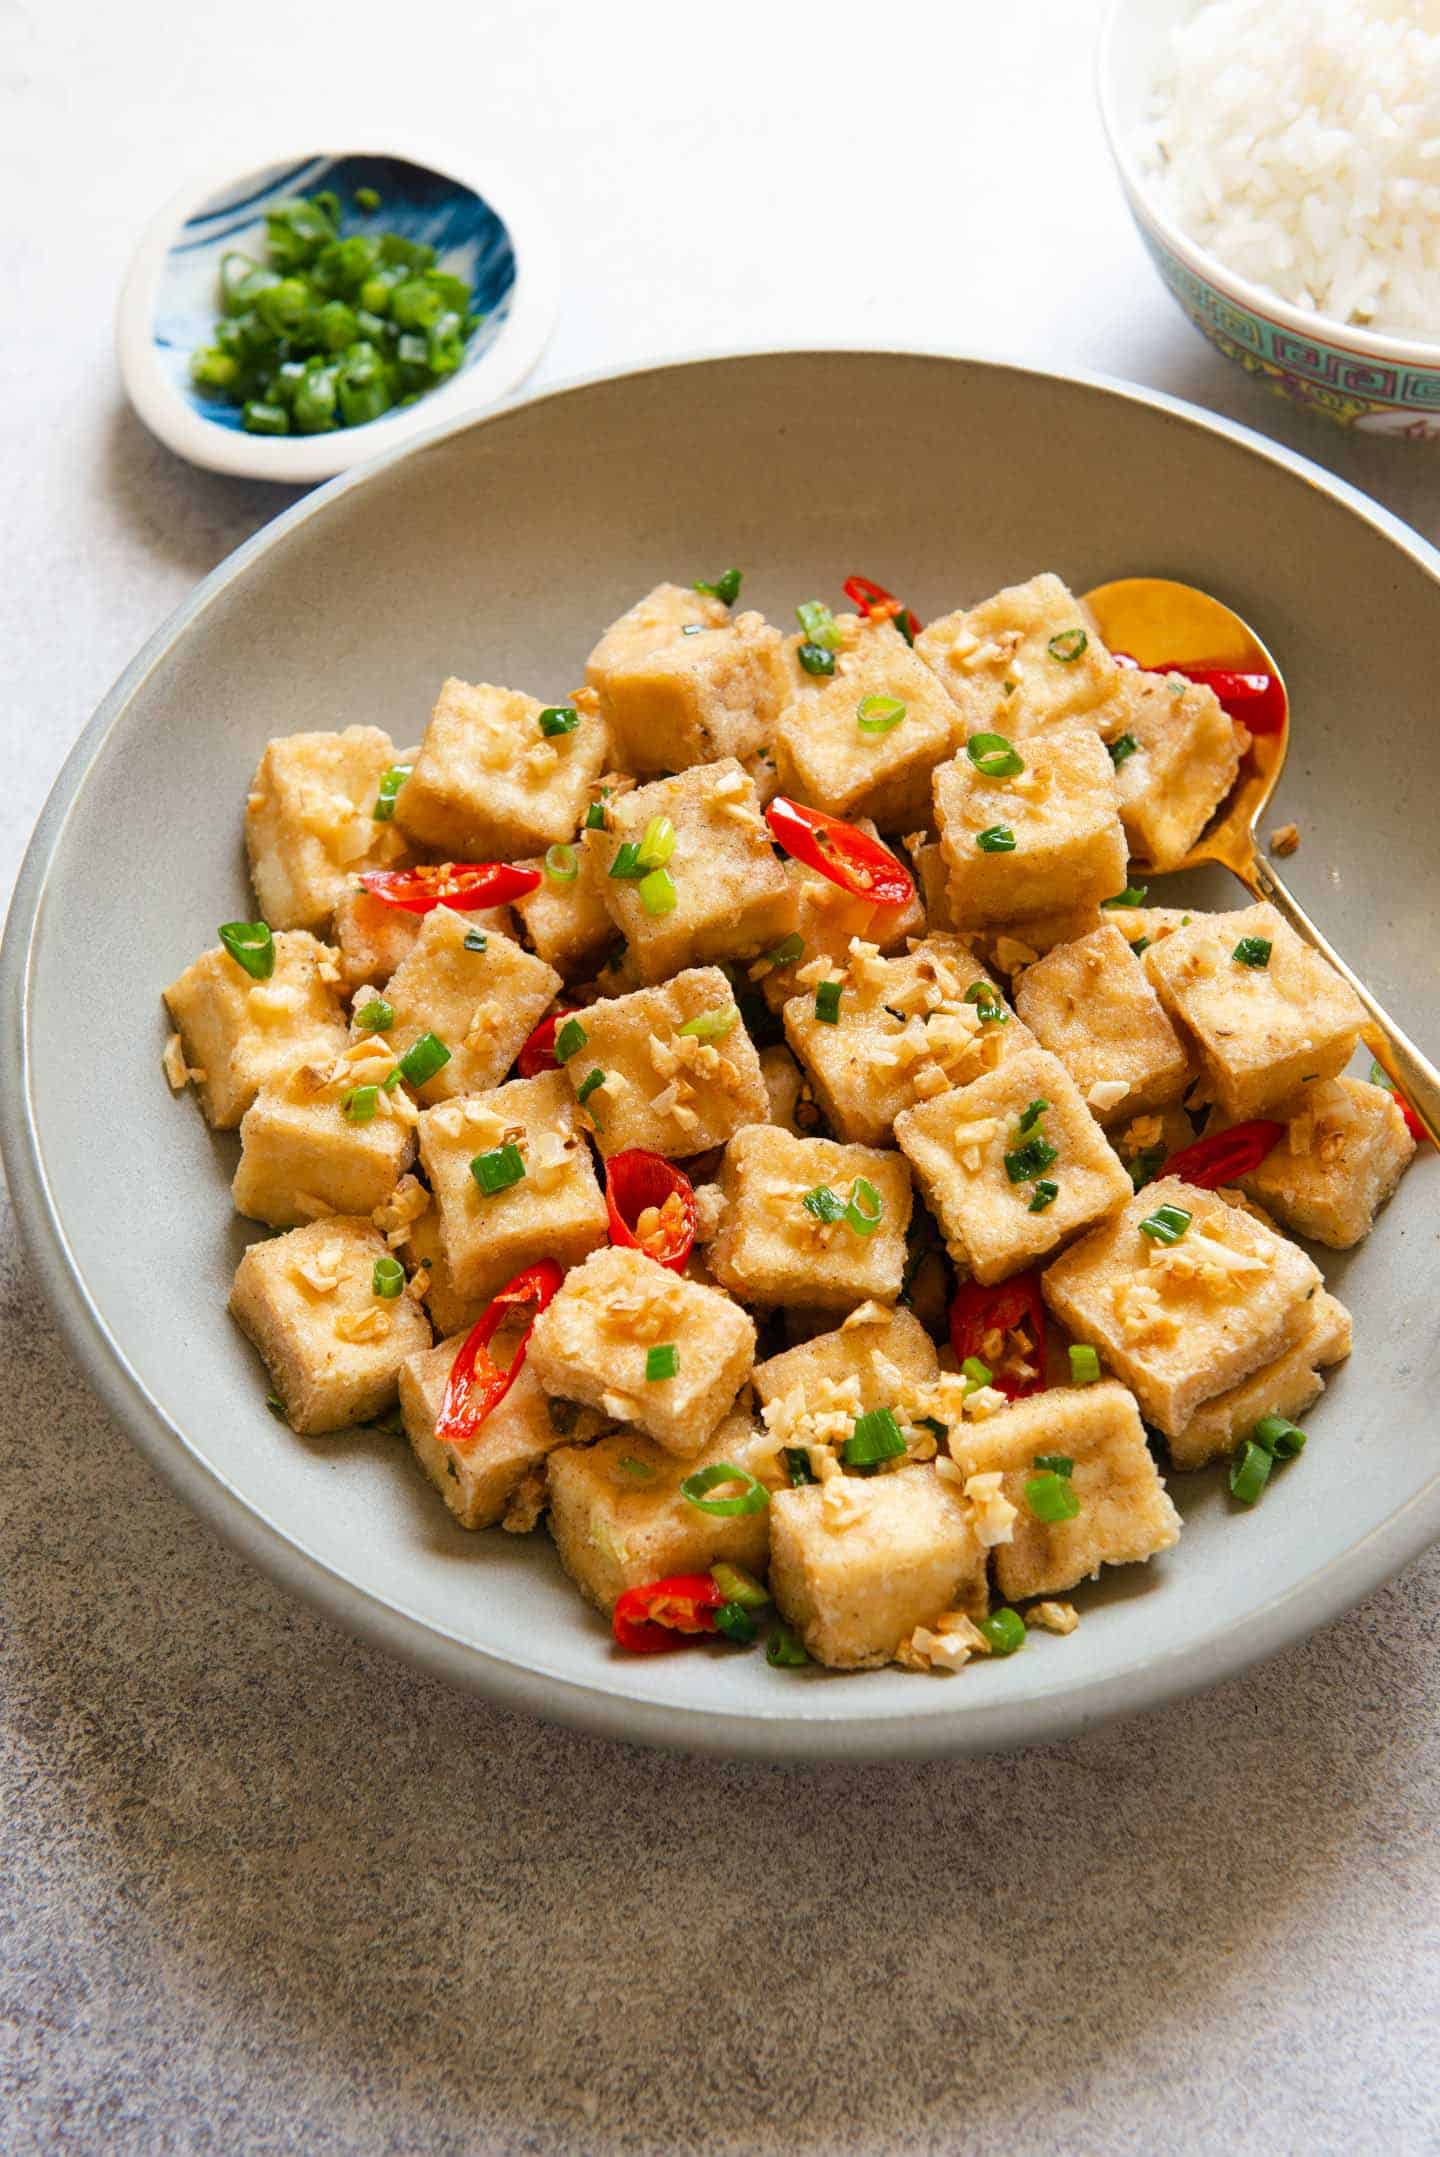 Salt and Pepper Tofu - easy vegan side dish